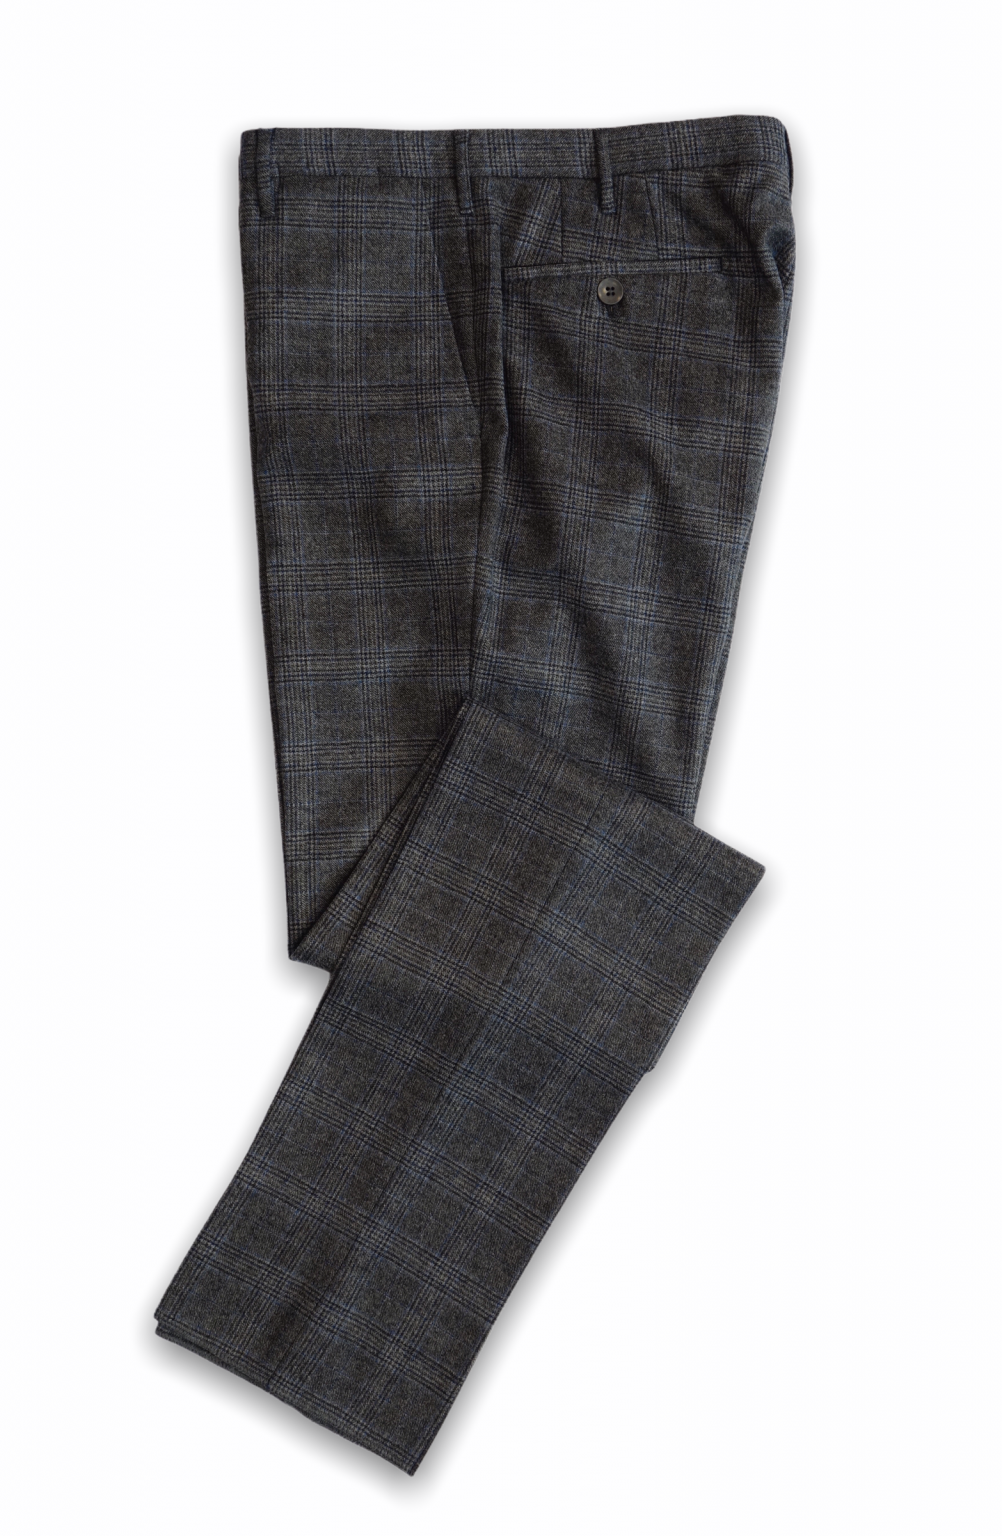 Rota Grey checks trousers | Trousers | Franco Montanelli